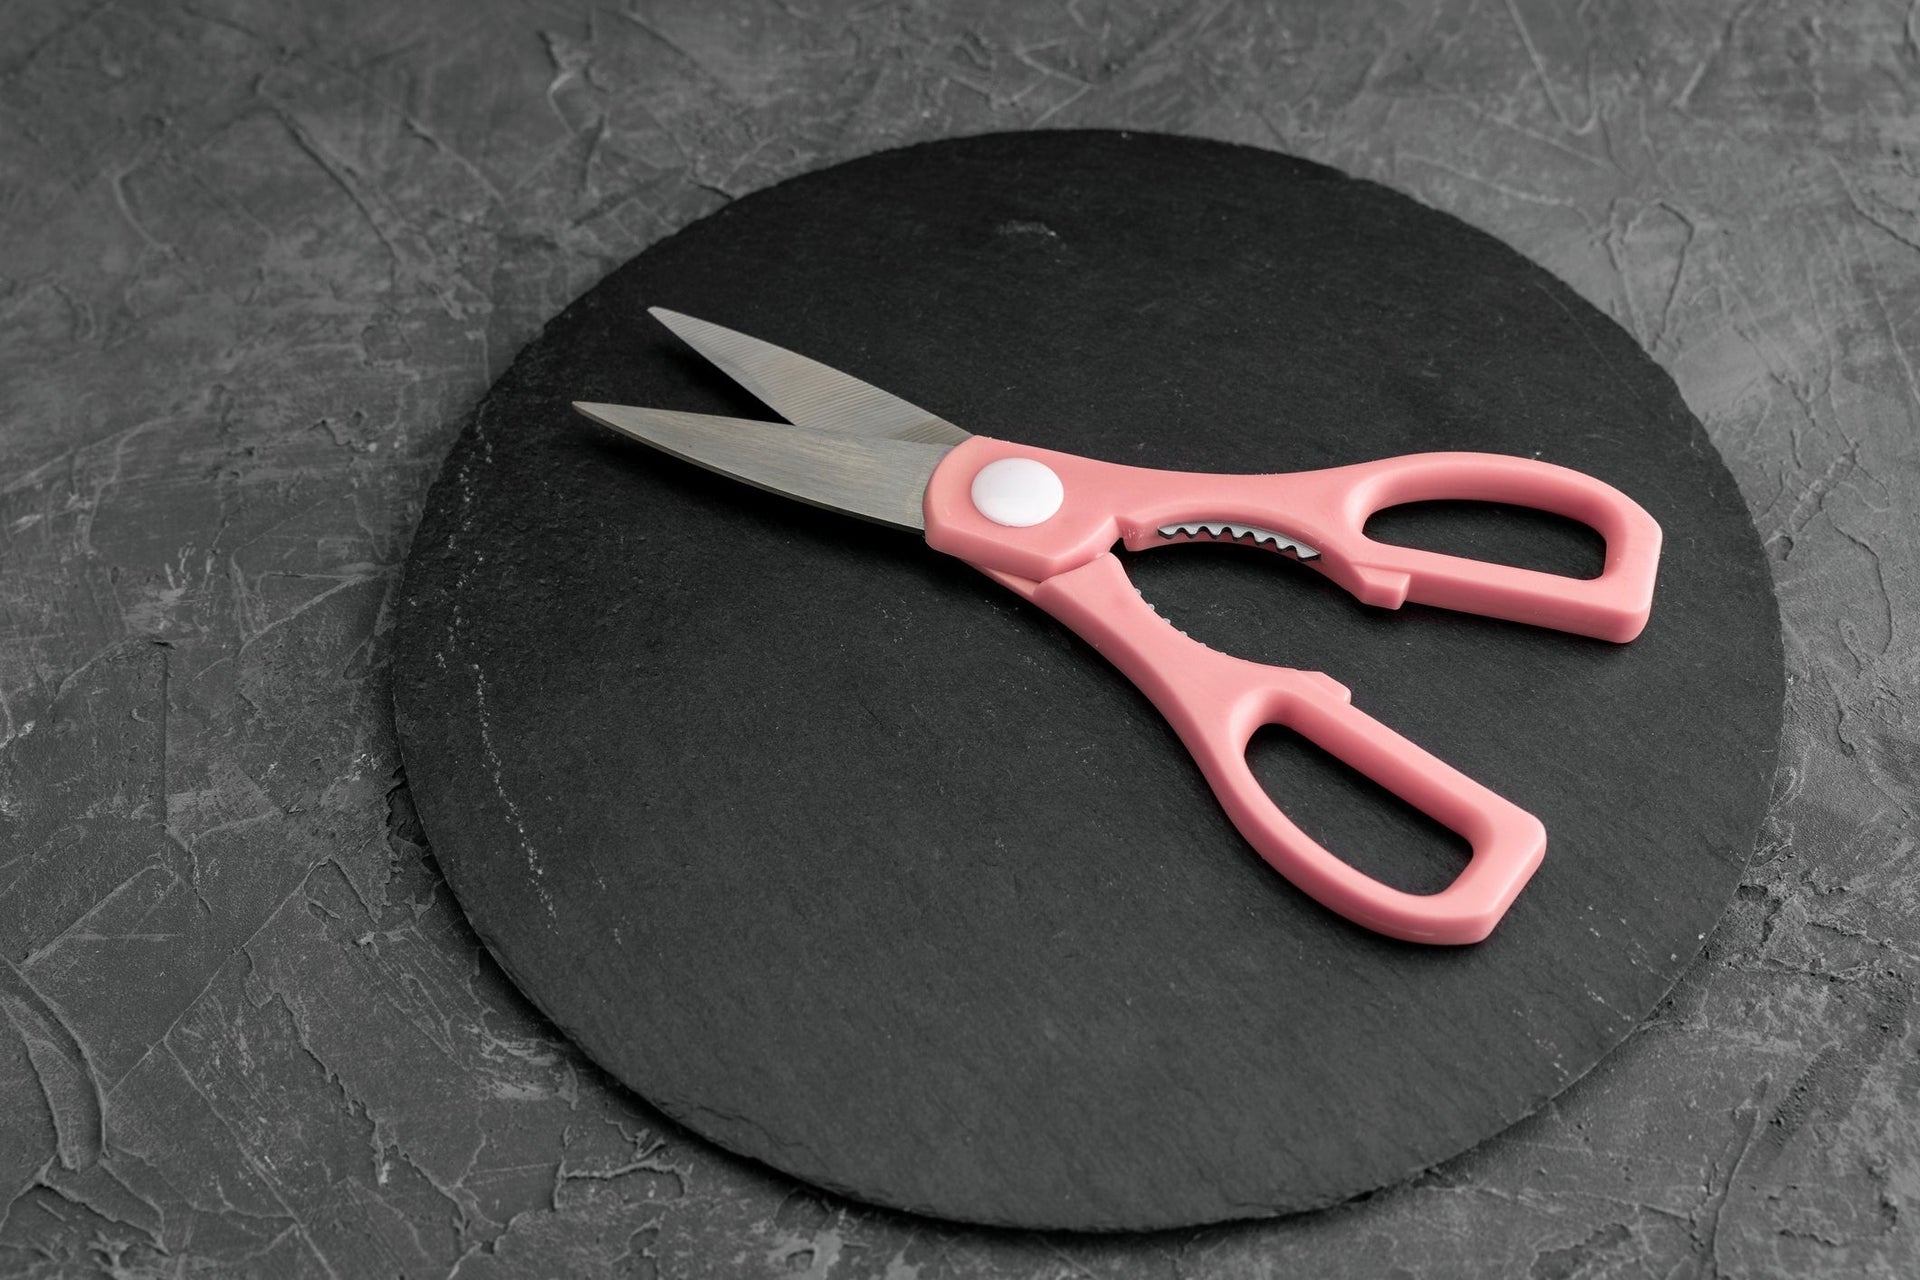 Sabatier SABPRSC02 Professional Kitchen Scissors  Buy Scissors from  TAYLORS EYE WITNESS10.99 – W Hurst & Son (IW) Ltd